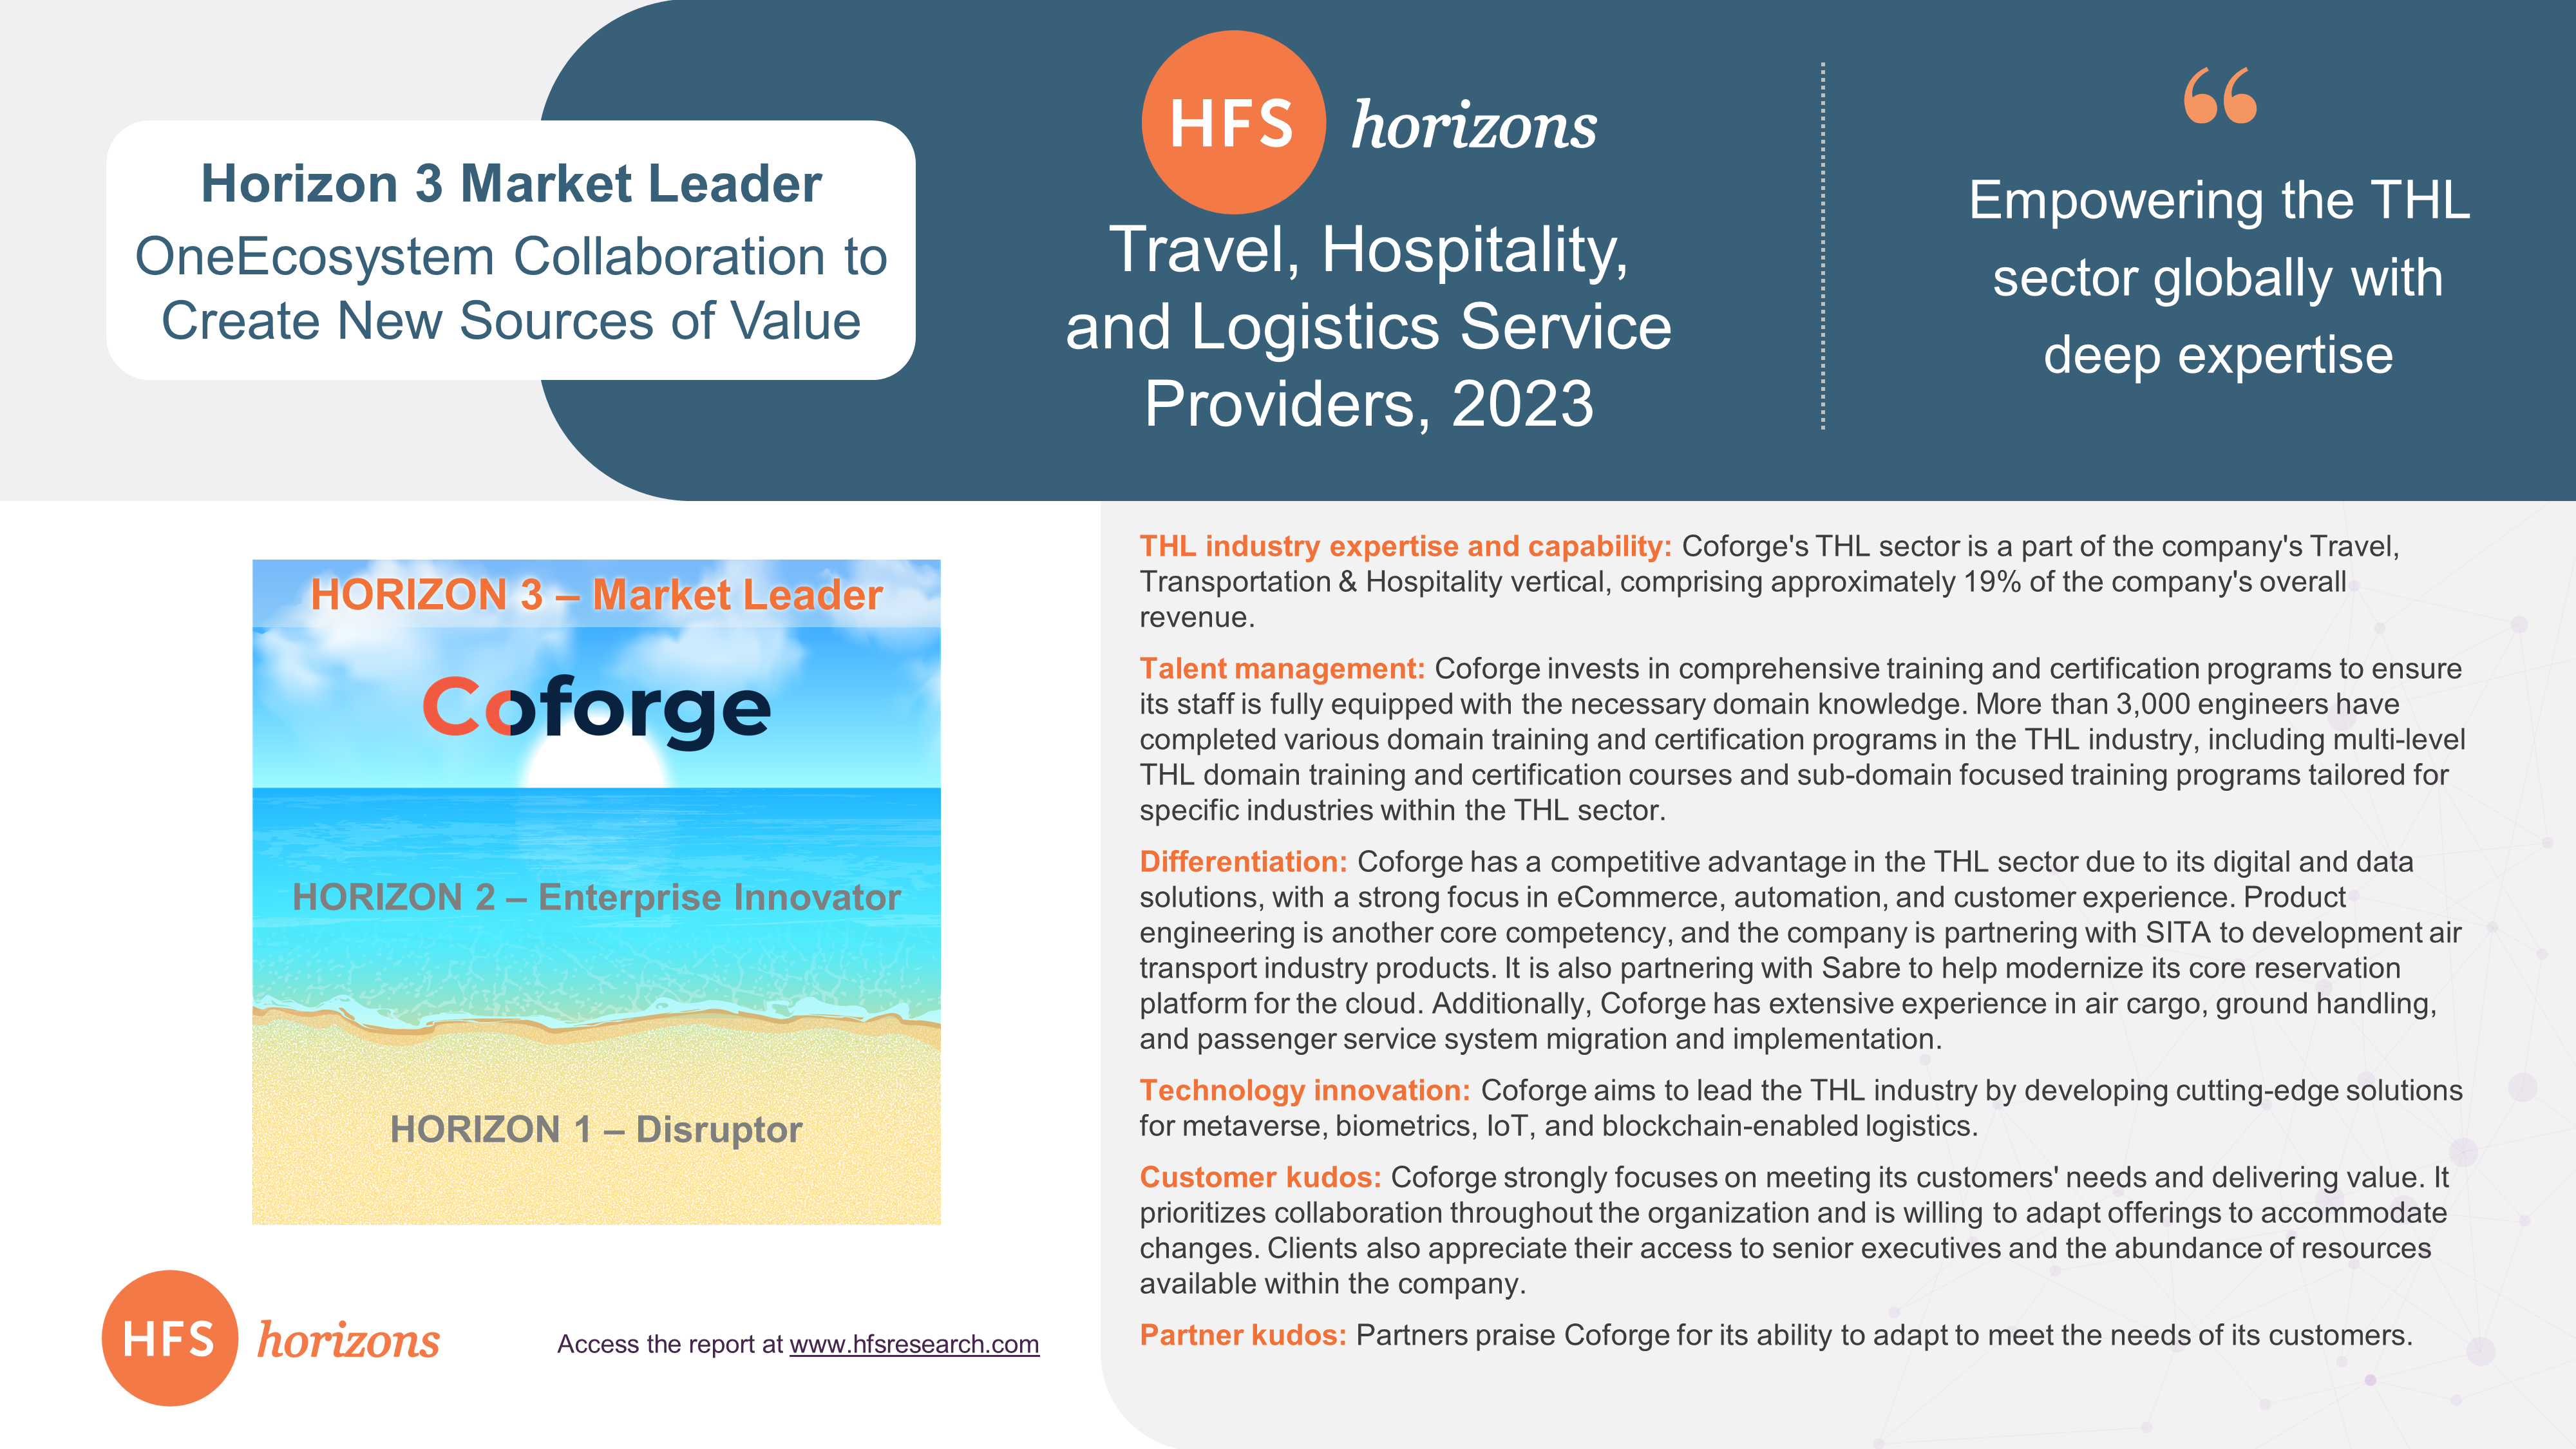 Infographic-Coforge-HFS-Horizons-travel-hospitality-logistics